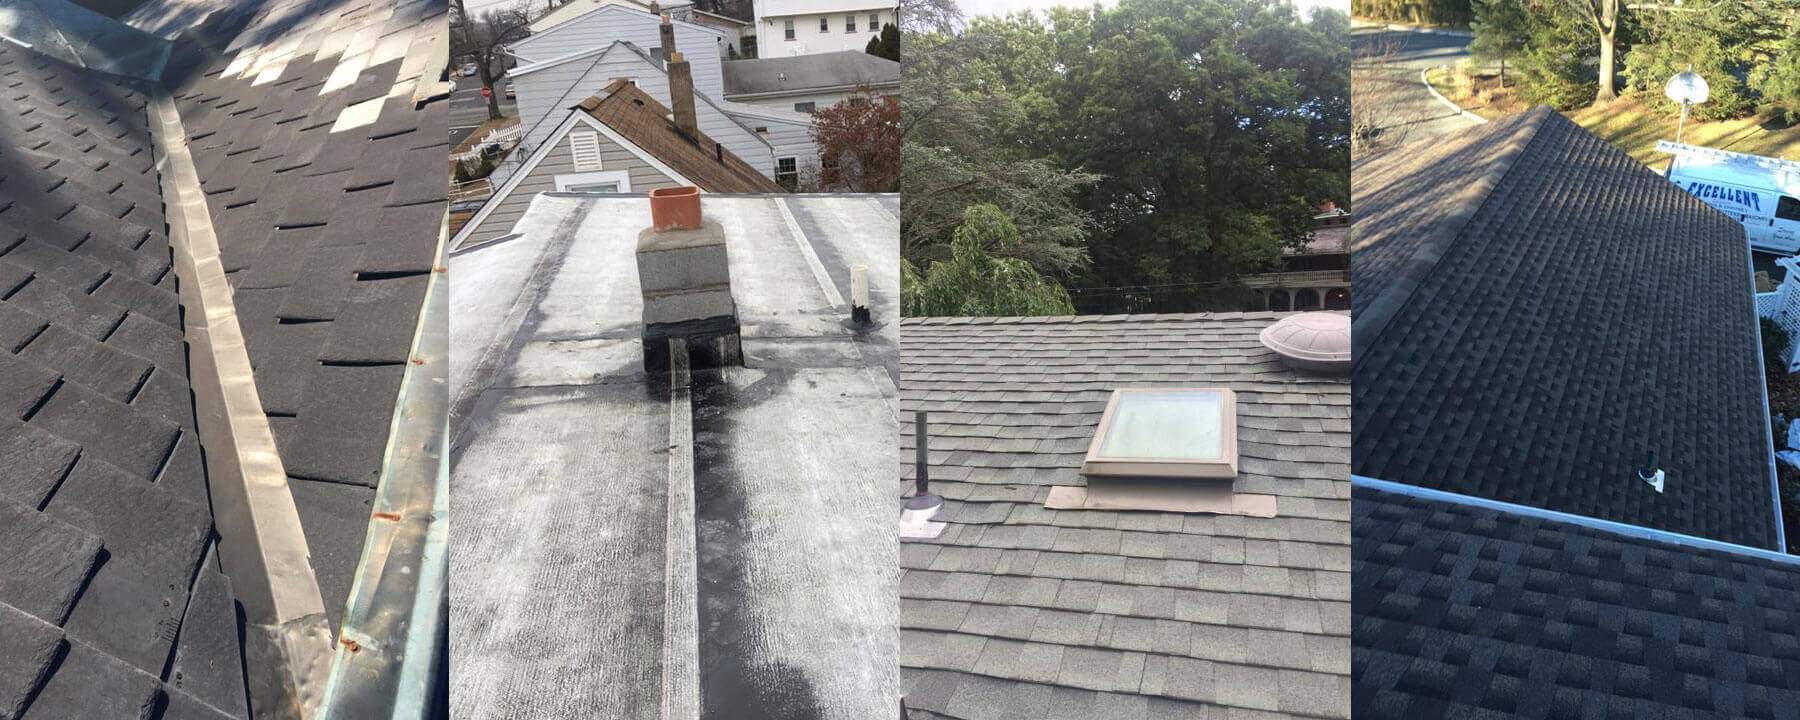 Roof Repair Service Cresskill NJ